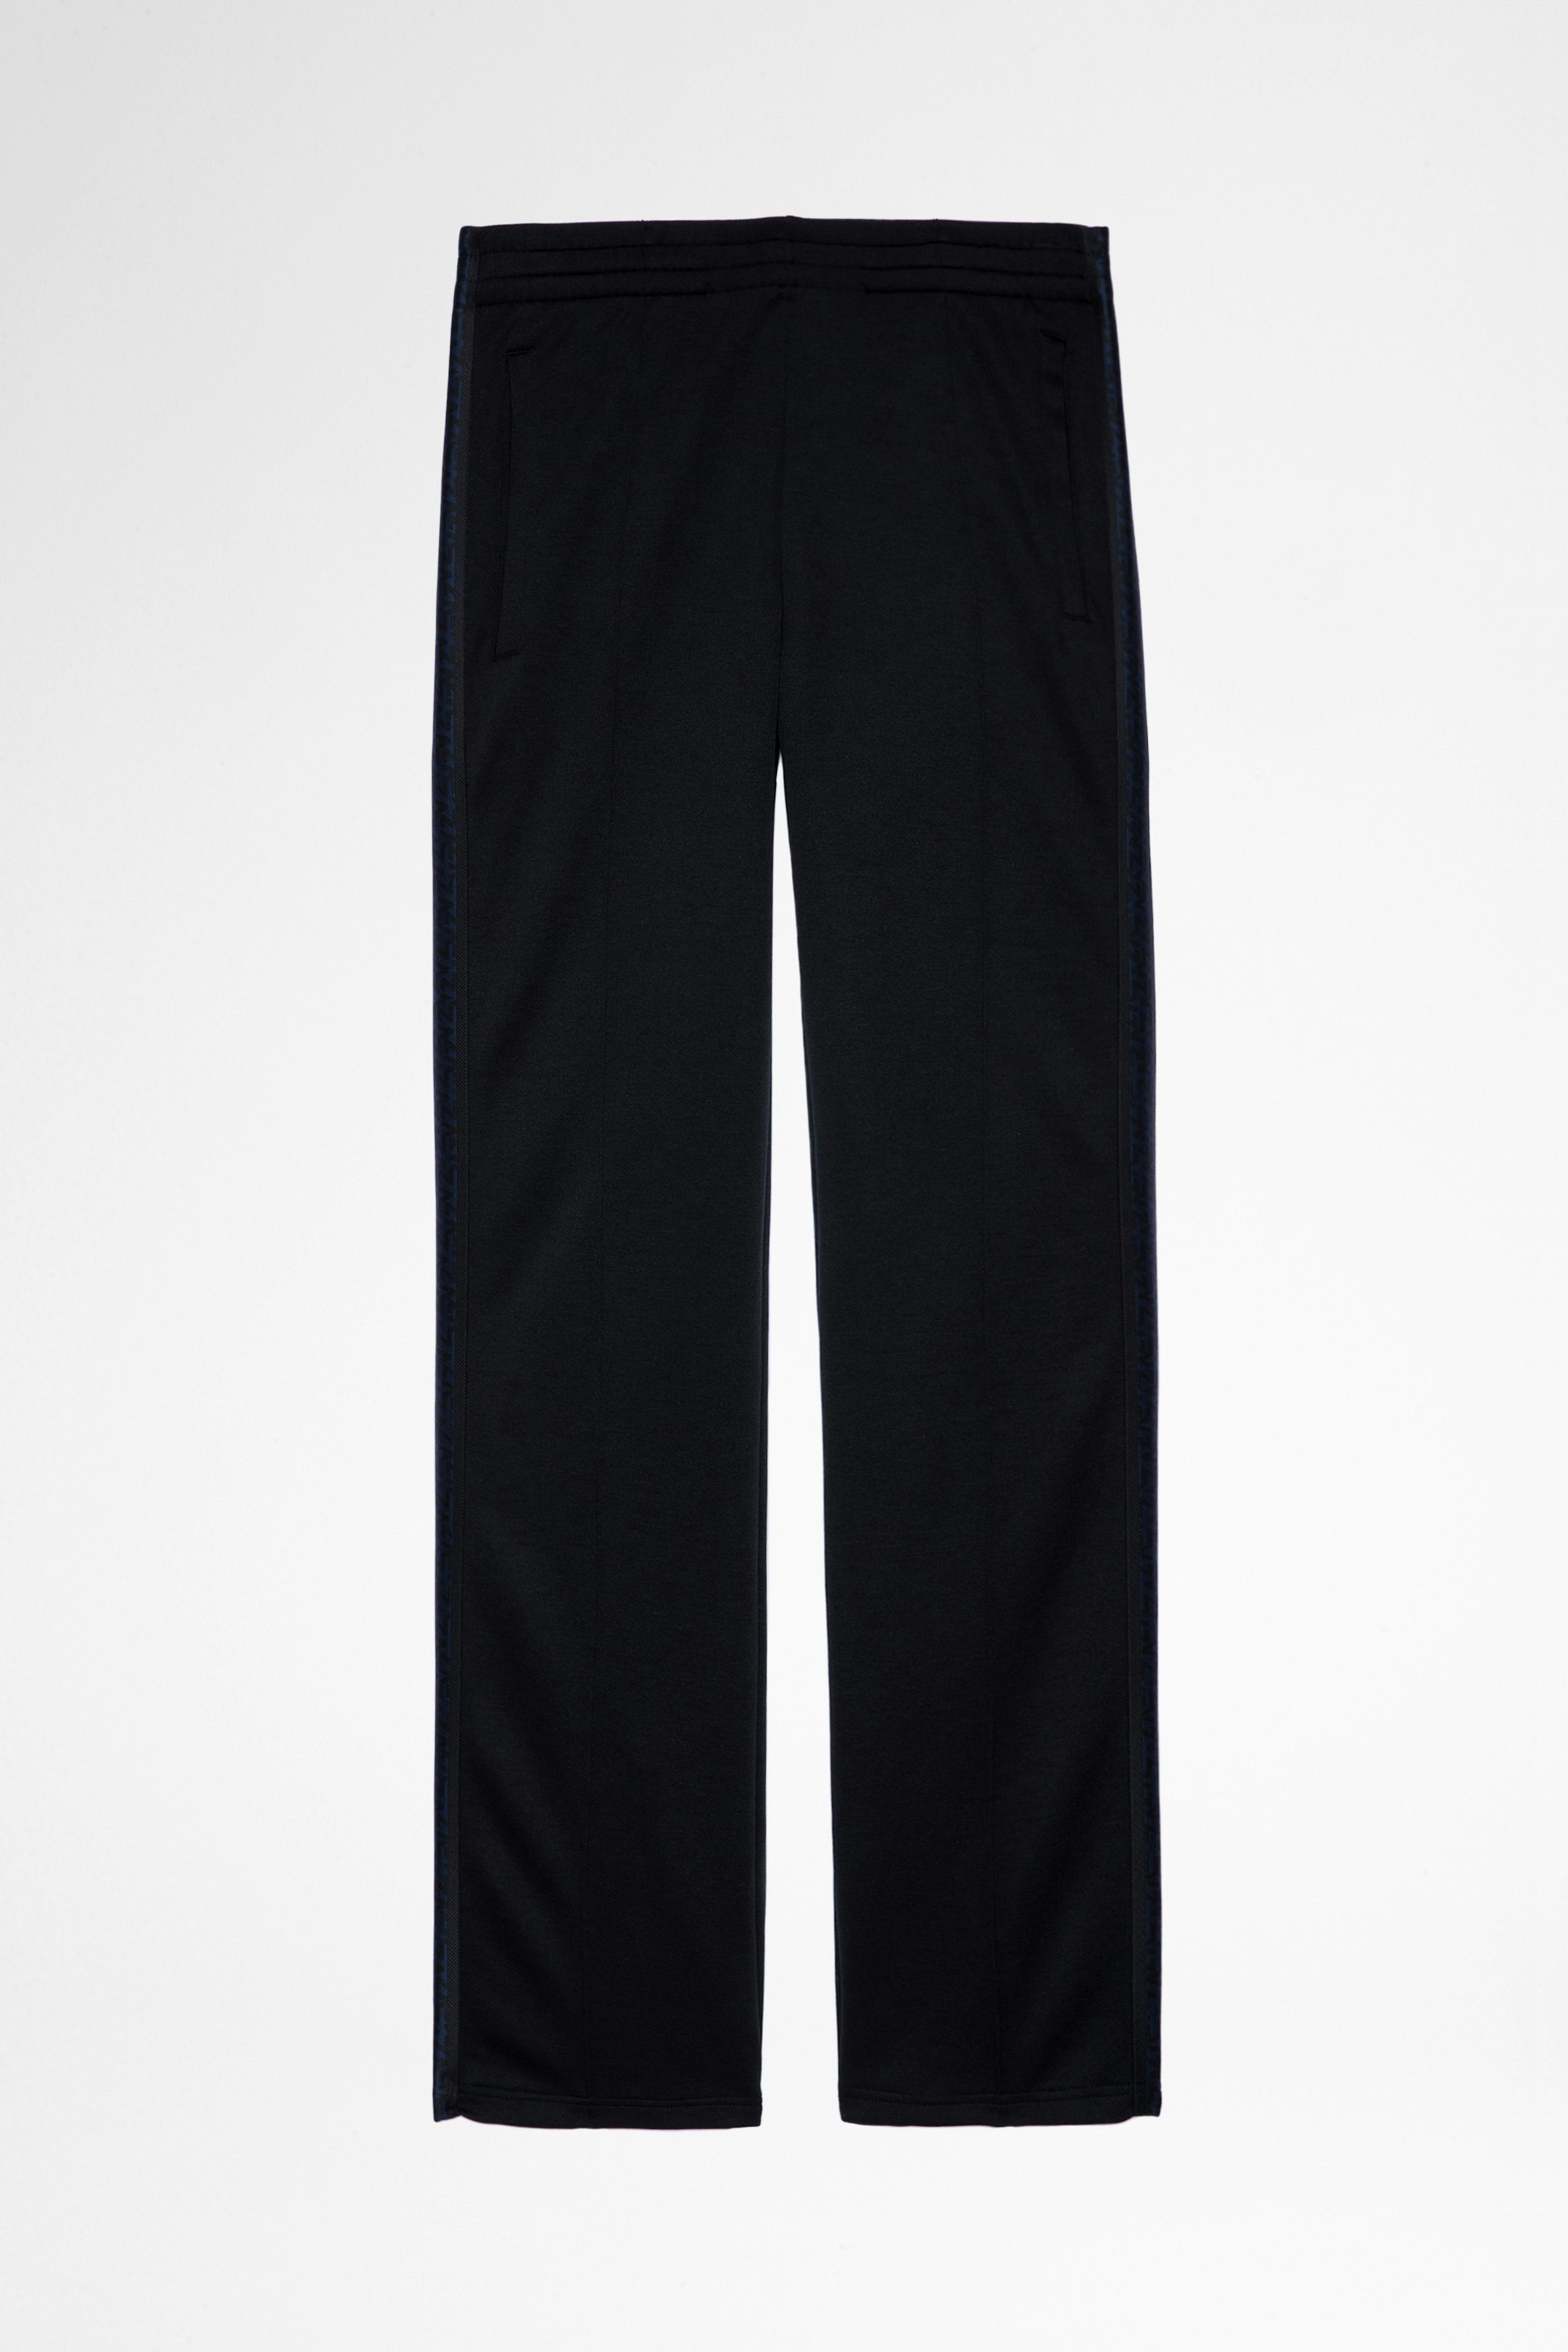 Pantalón Chillyn Pantalón de hombre acampanado negro con bandas laterales. Confeccionado con fibras procedentes de la agricultura ecológica.